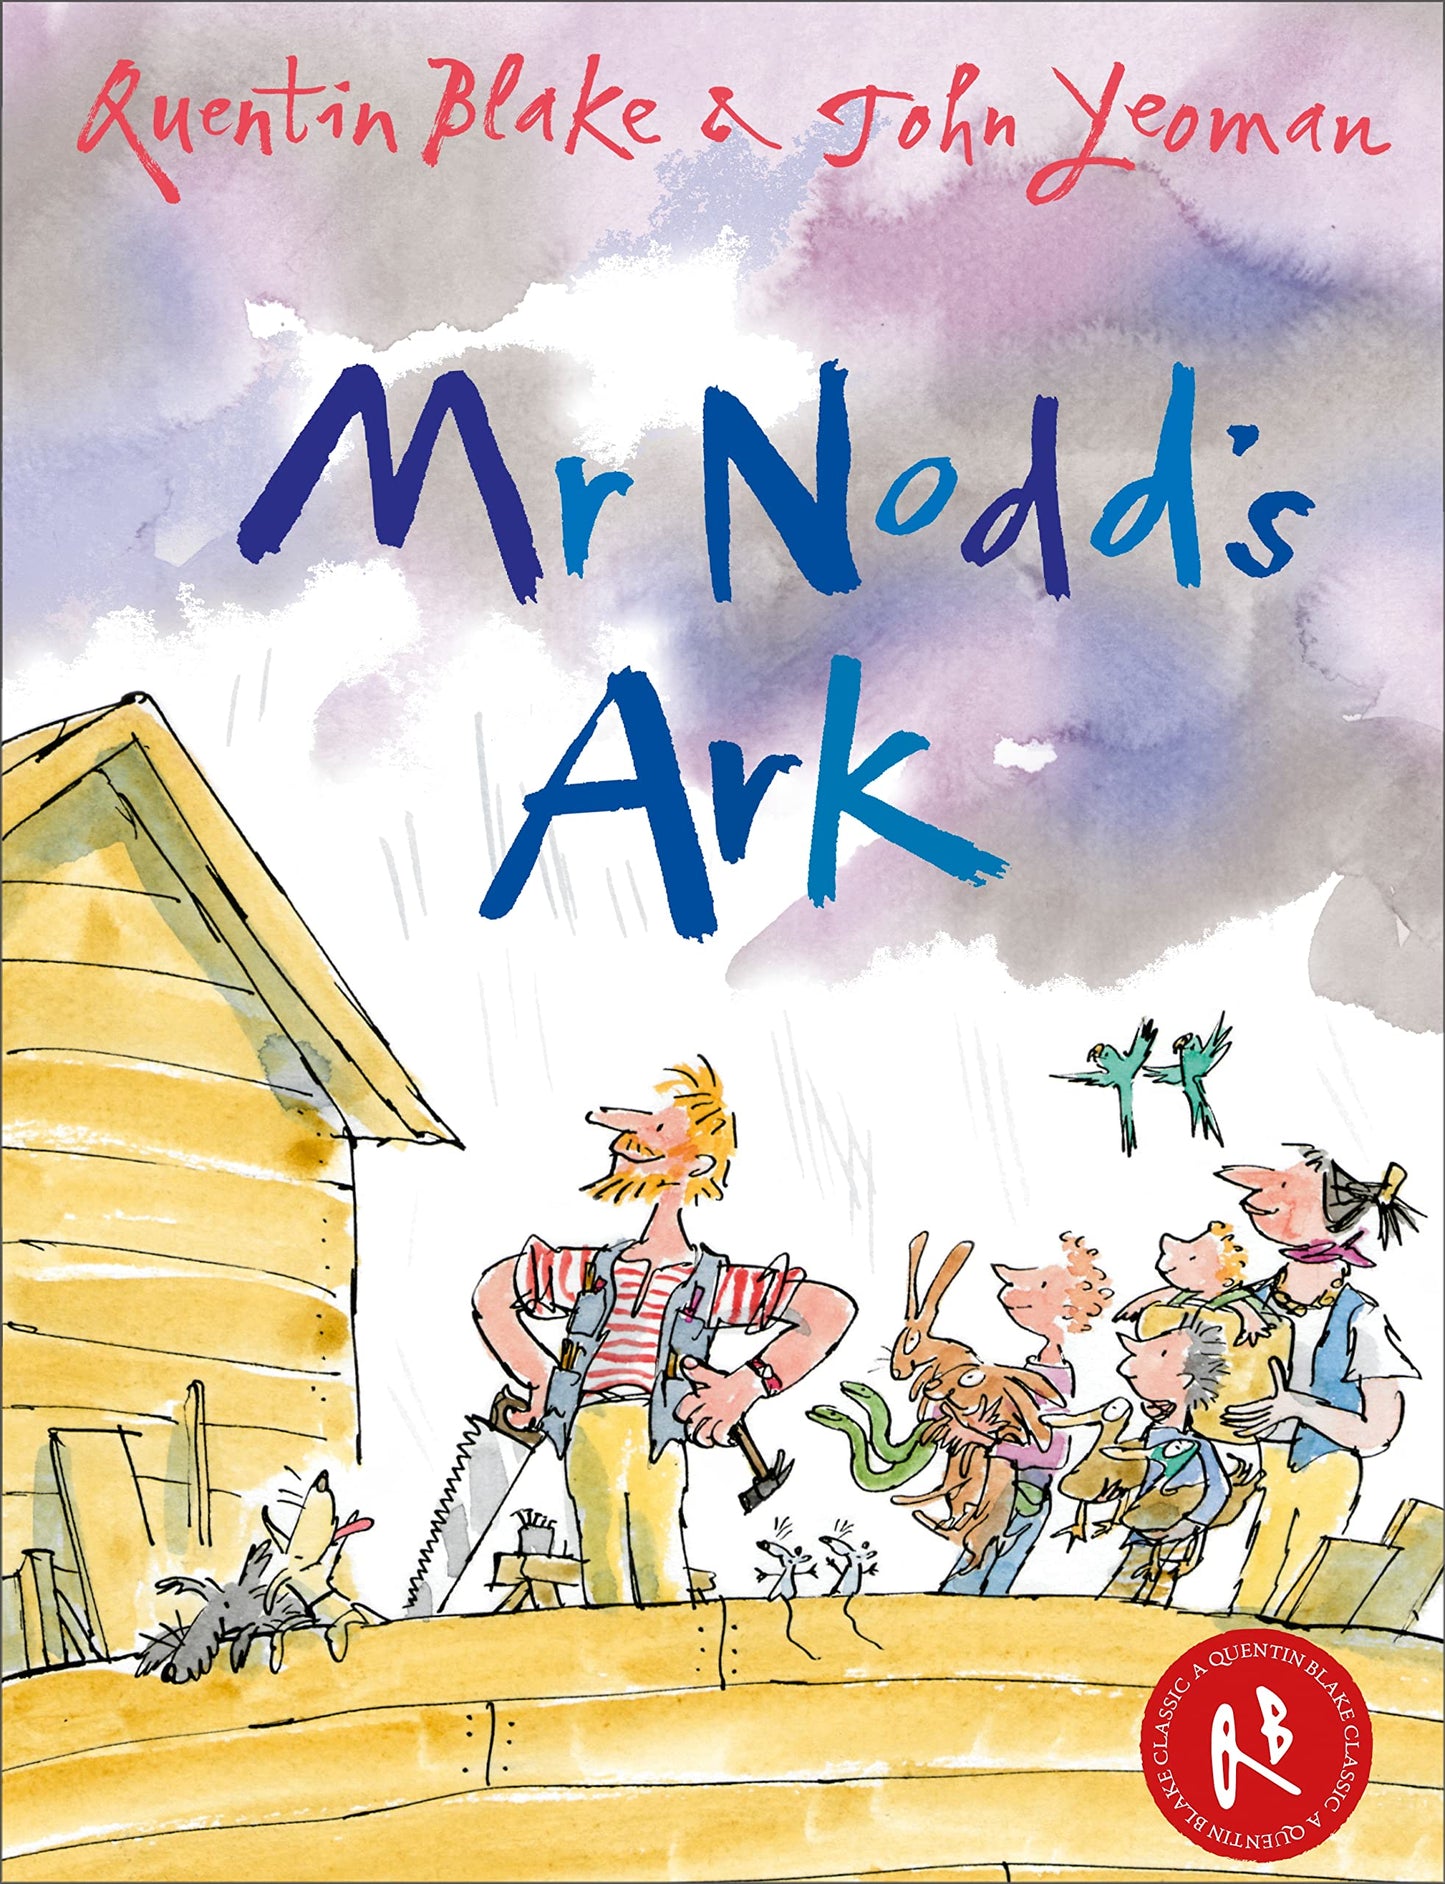 Mr Nodd’s Ark by Quentin Blake & John Yeoman